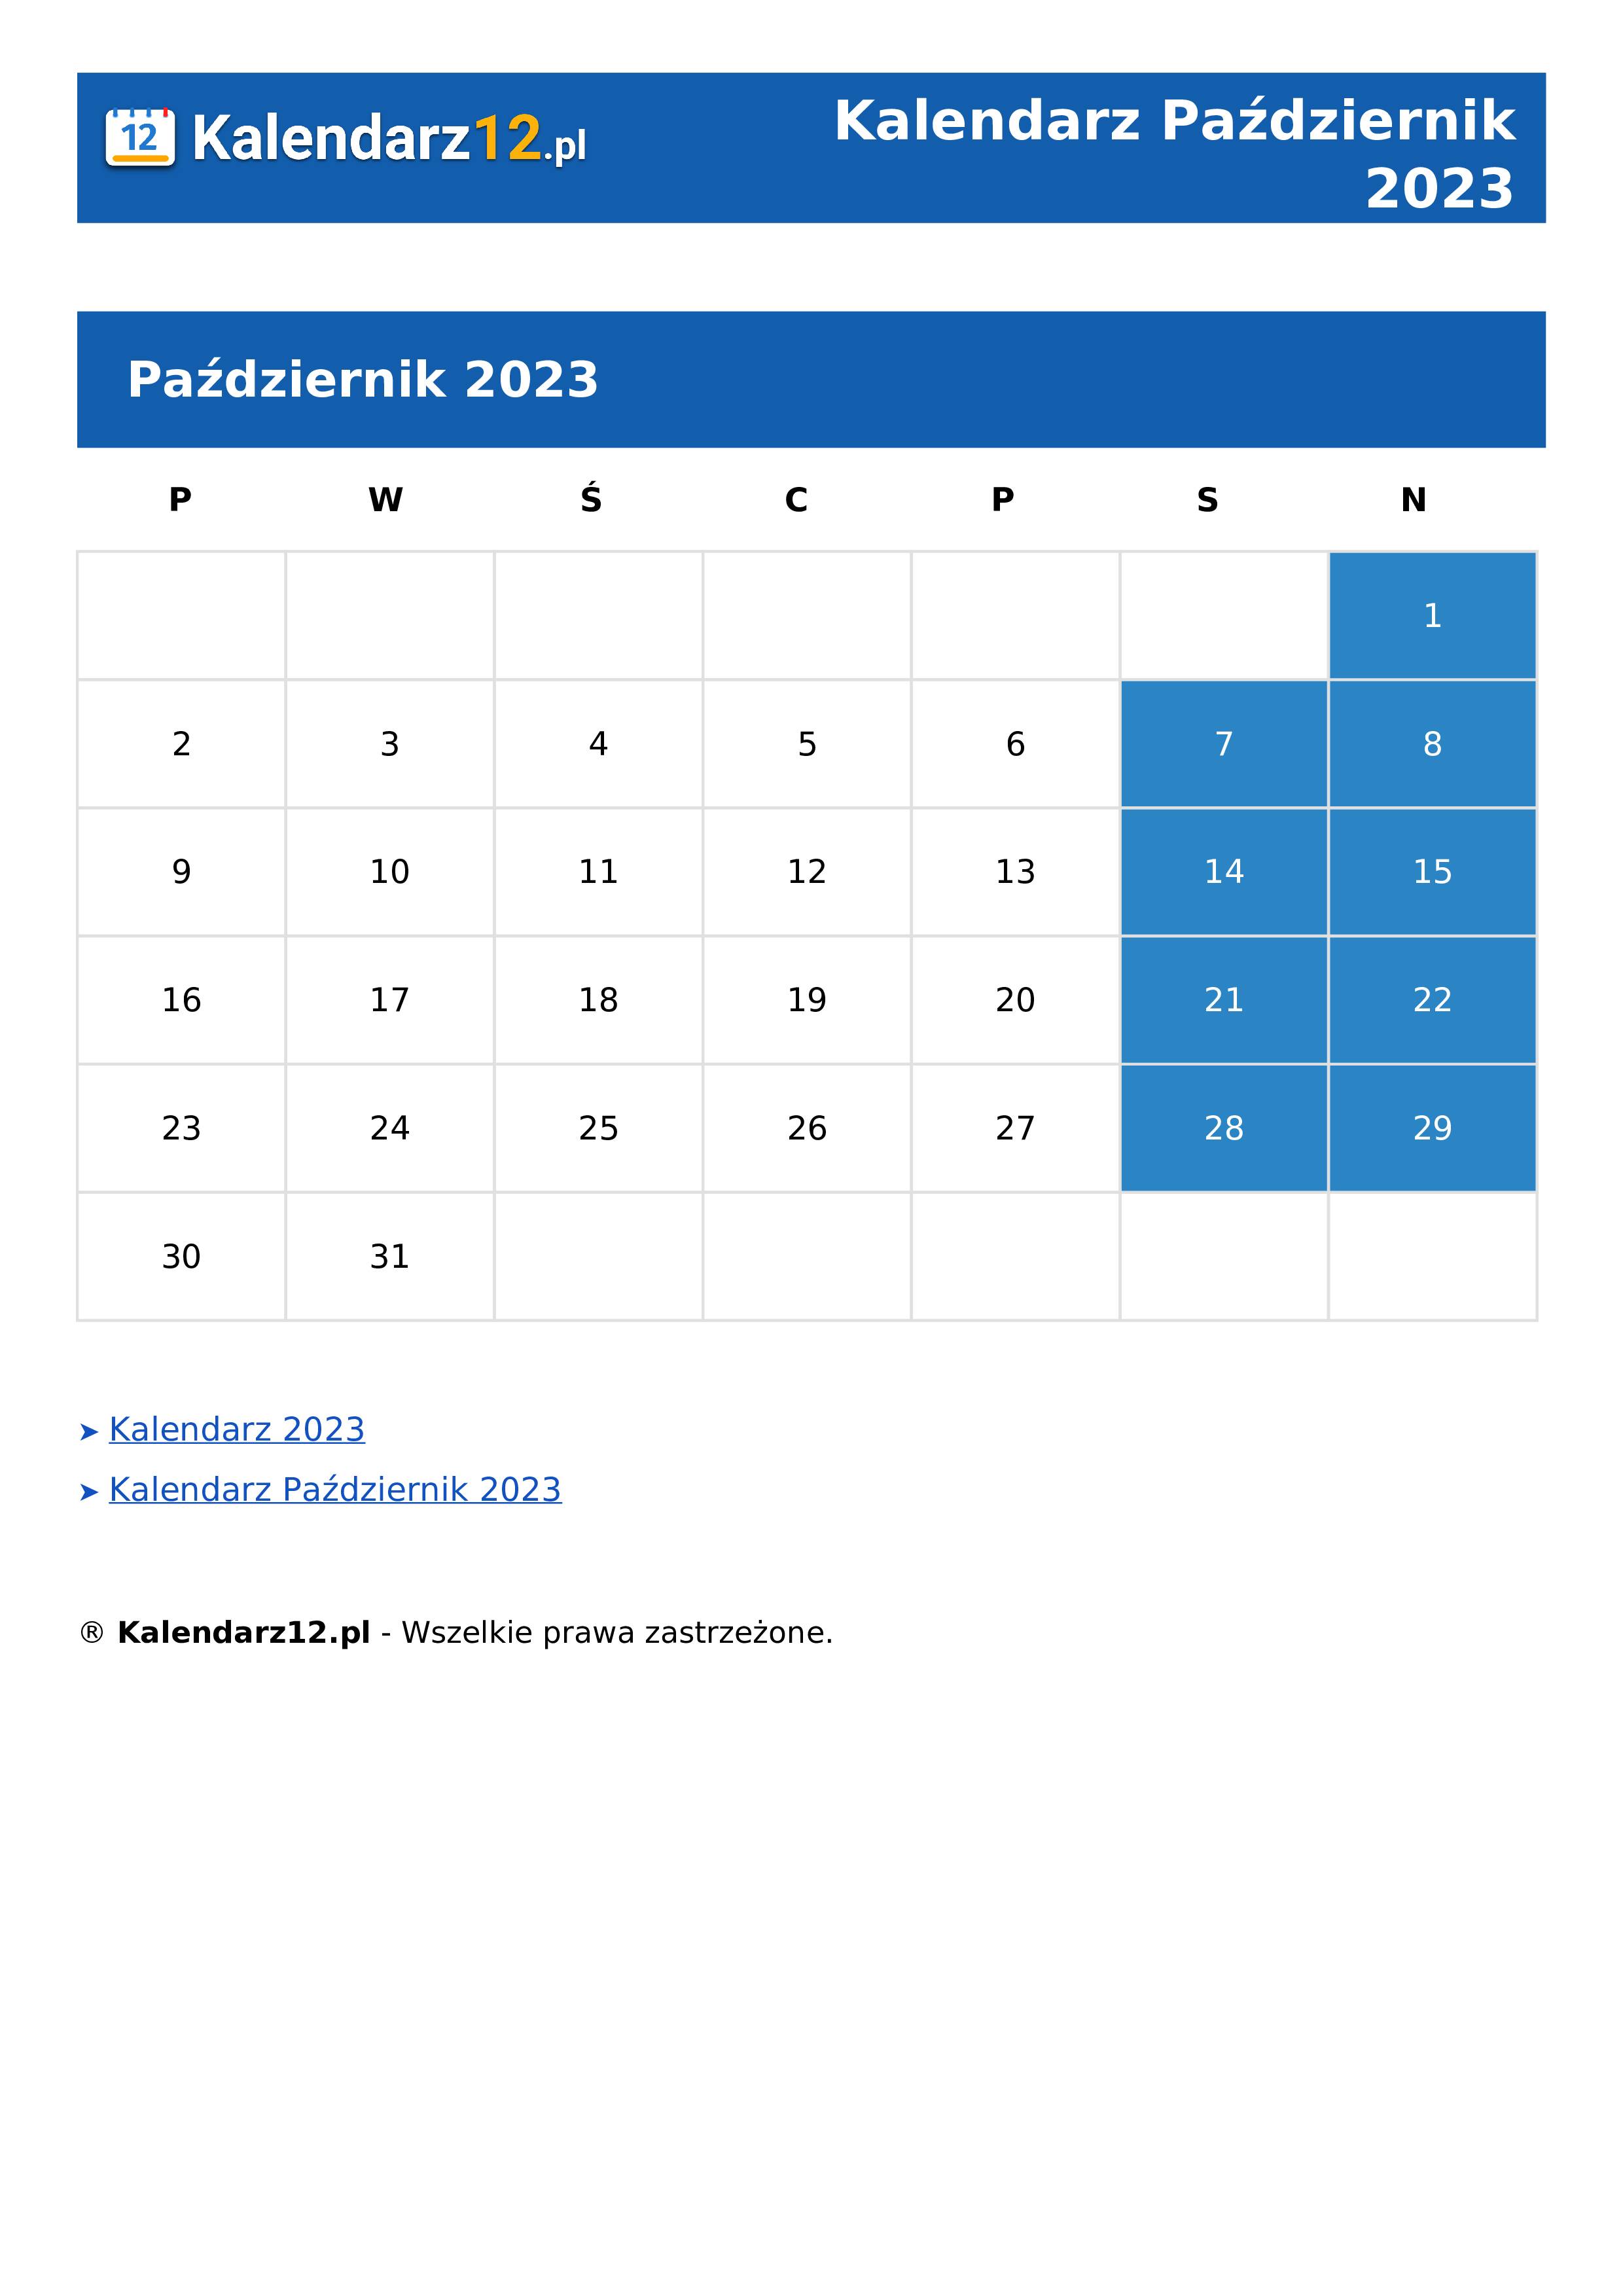 Calendar Październik 2023